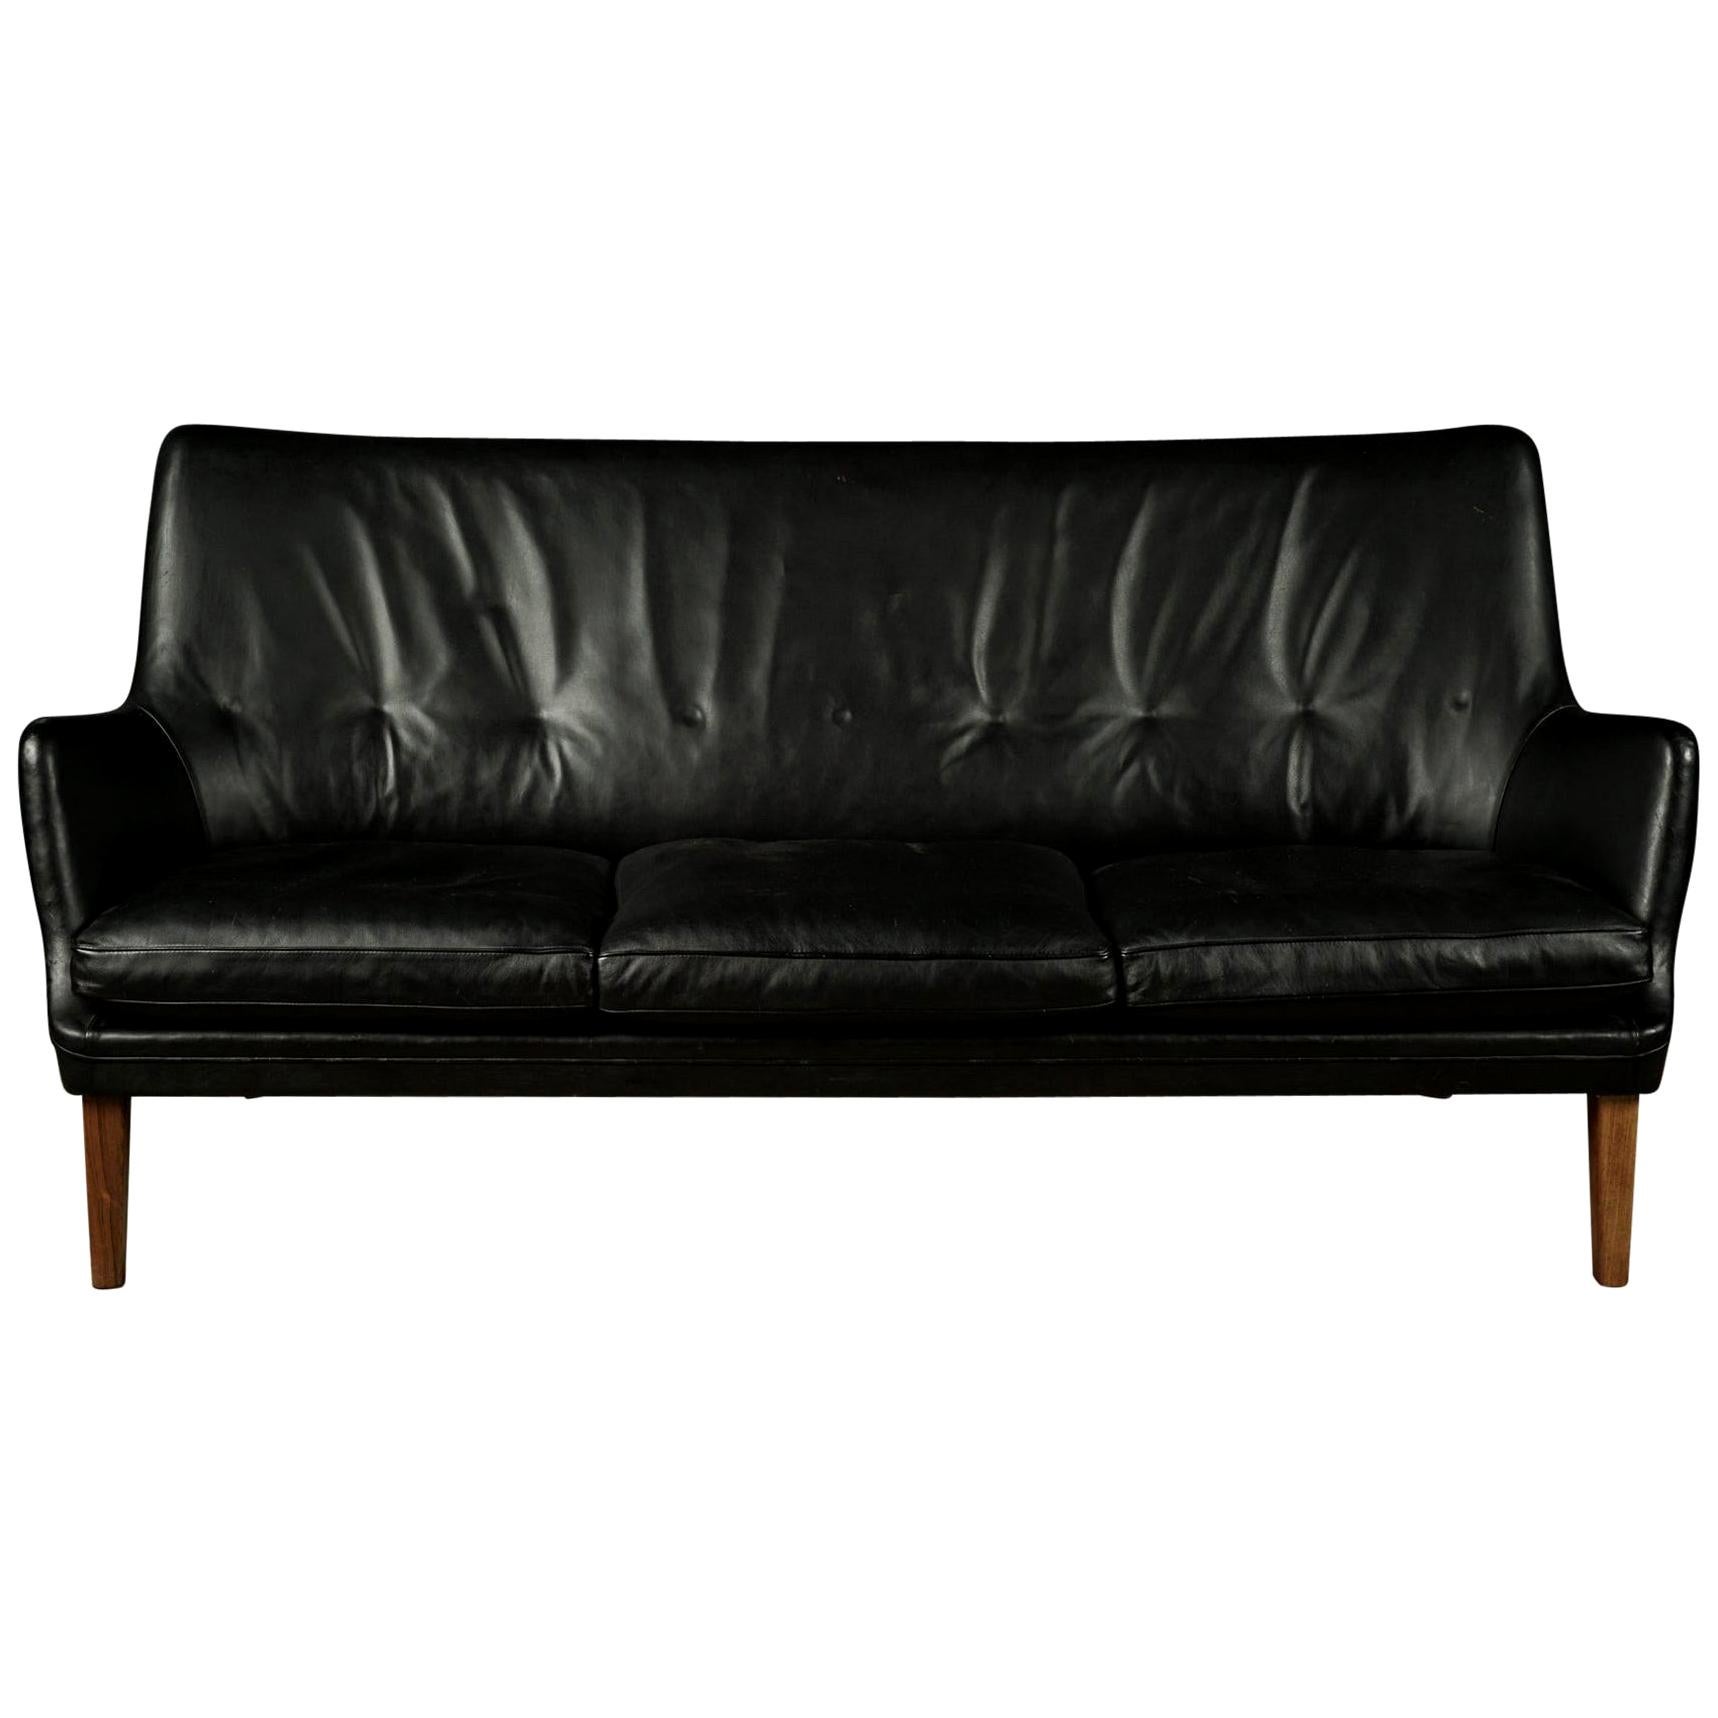 Rare Midcentury Leather Sofa Designed by Arne Vodder, Denmark, circa 1960